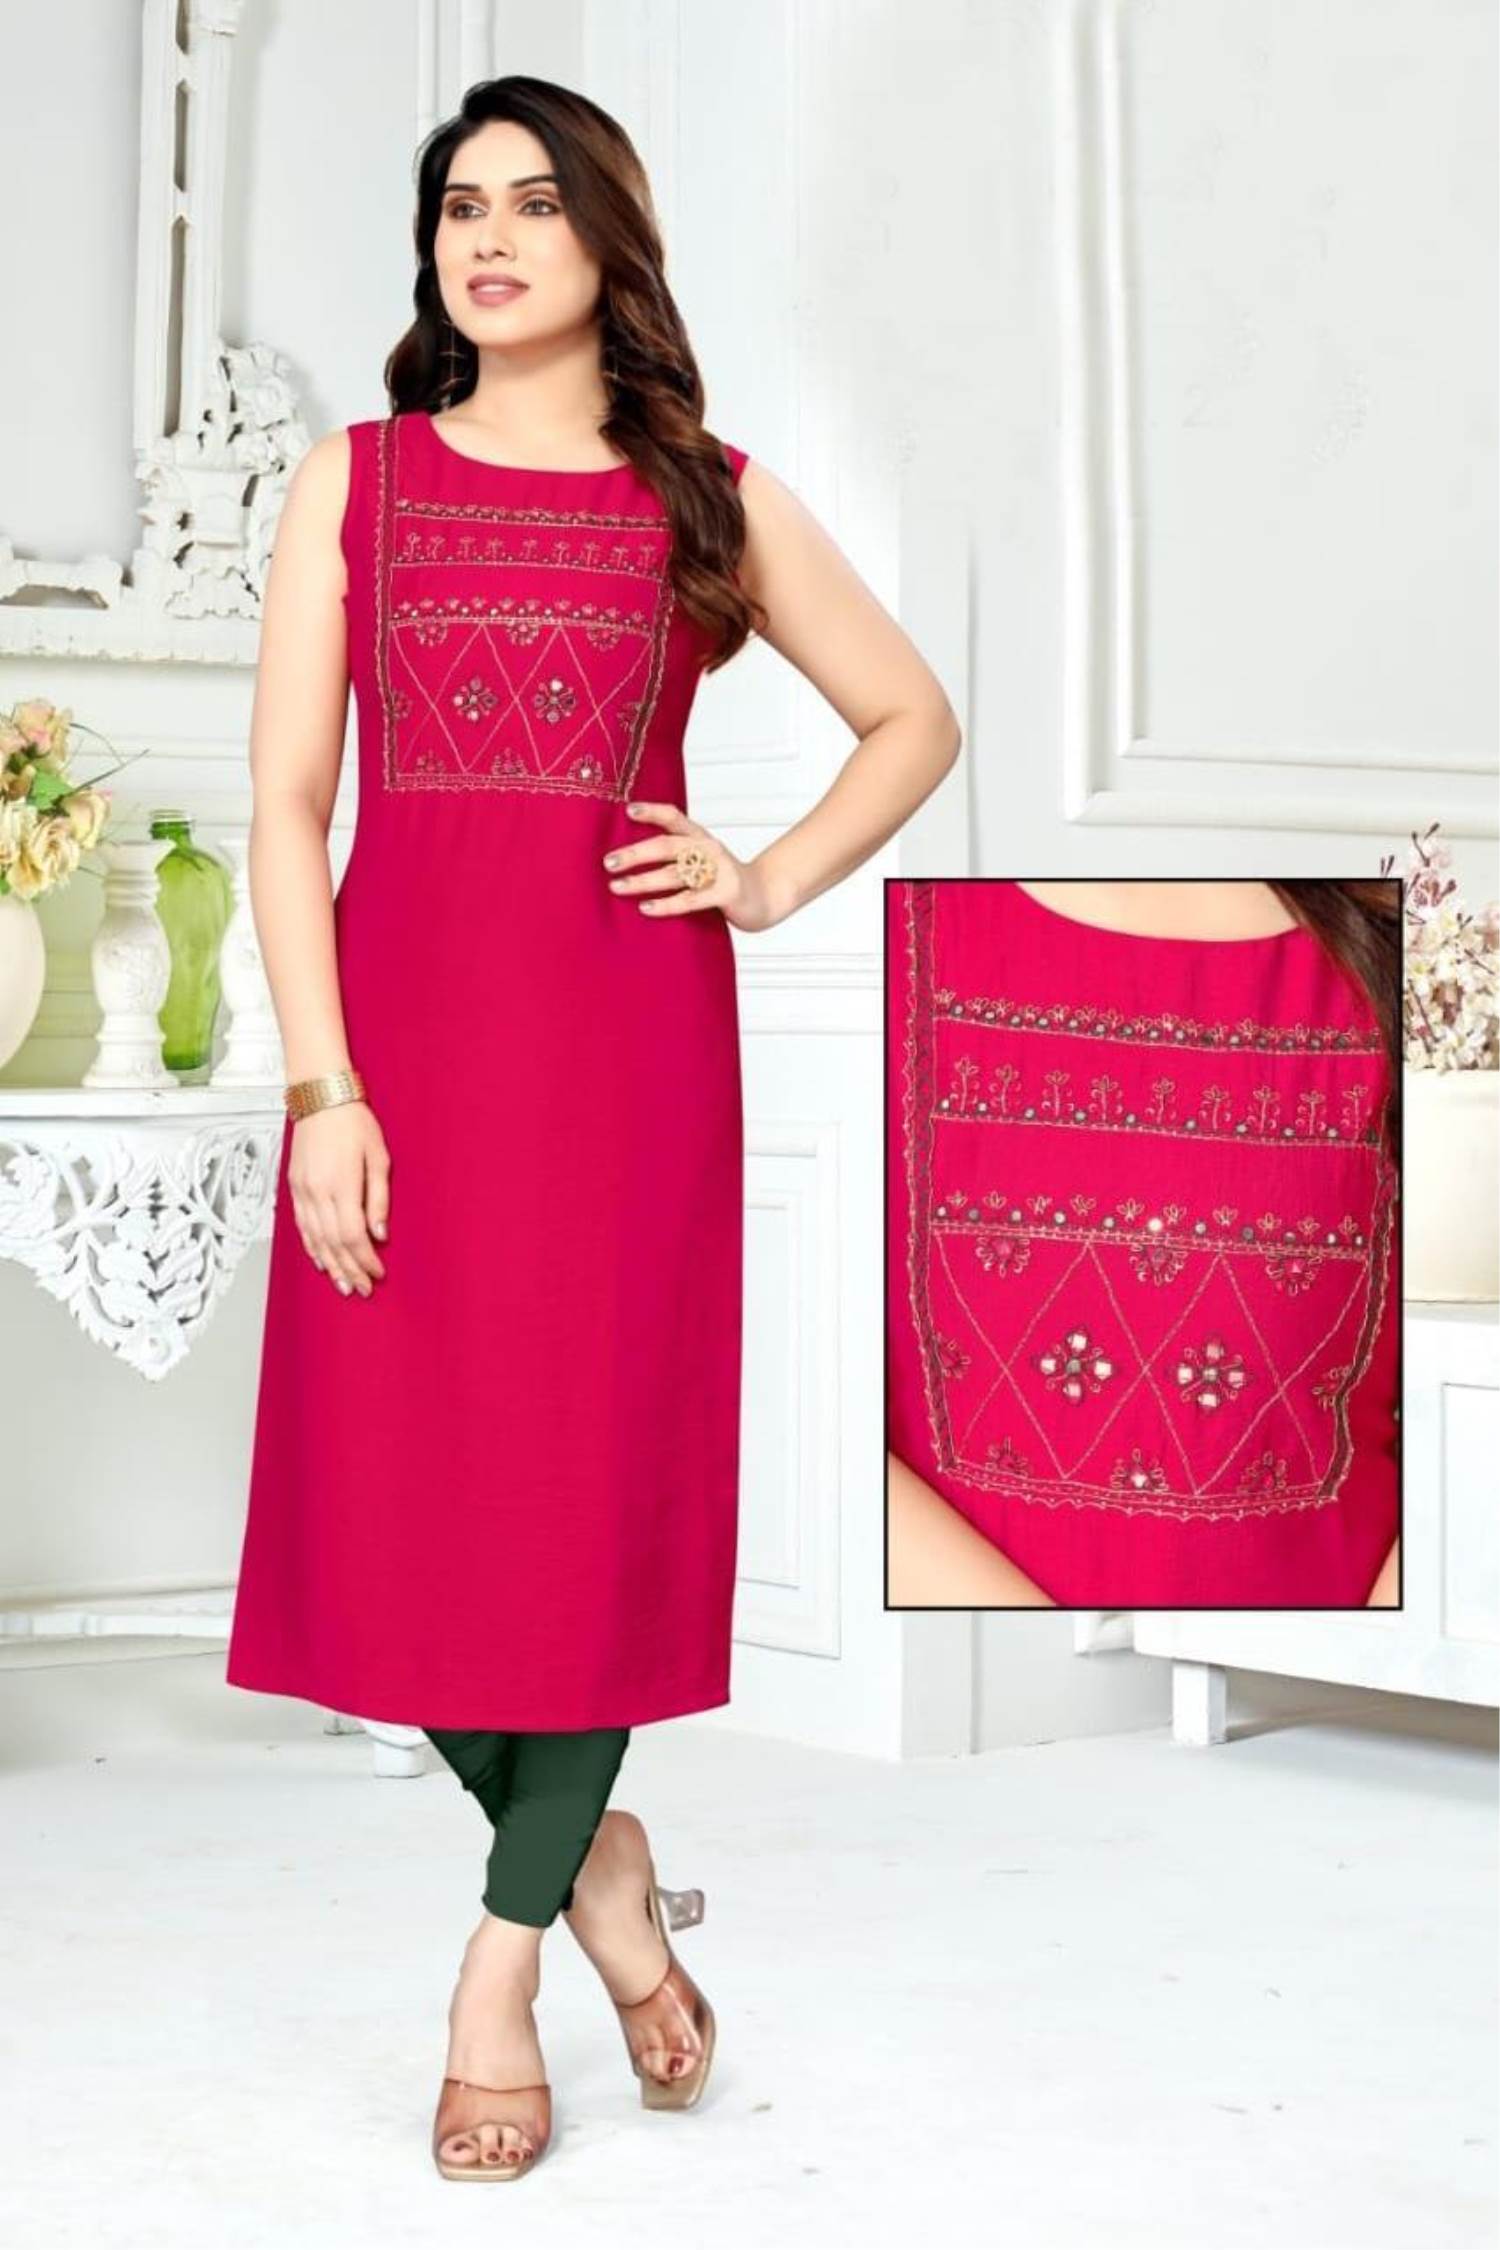 Imperial Rani Pink Color Belt Foil Printed Rayon Ready Made Long Kurti For  Festive Wear, Tail Cut Kurti, High Low Kurti, डिज़ाइनर कुर्ती - Skyblue  Fashion, Surat | ID: 26140830273